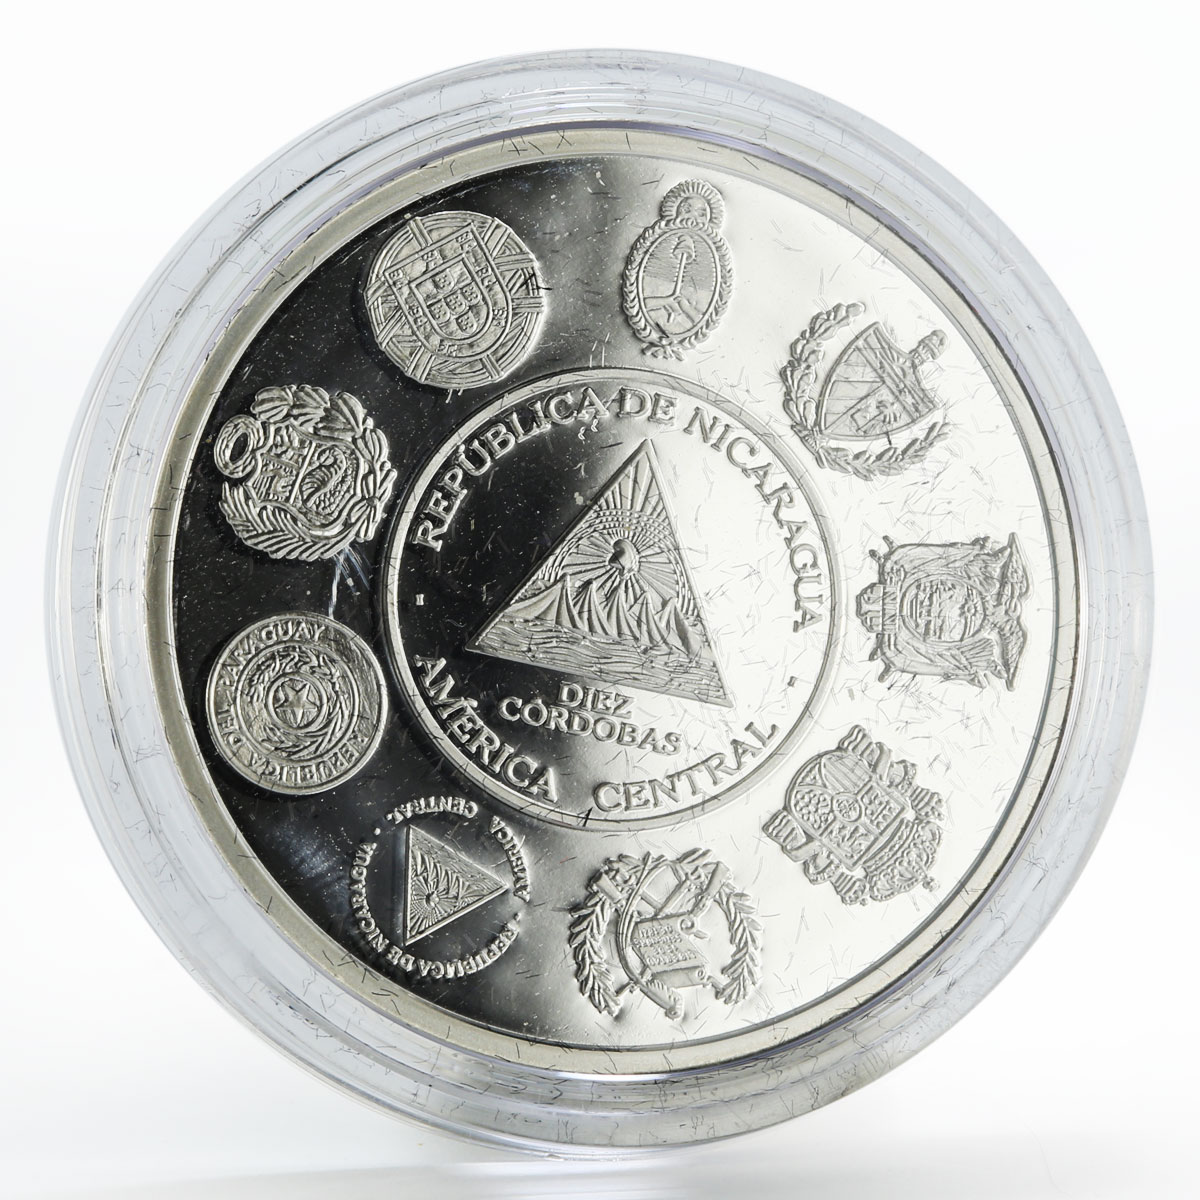 Nicaragua 10 cordobas Volcano Momotombo colored silver coin 2017